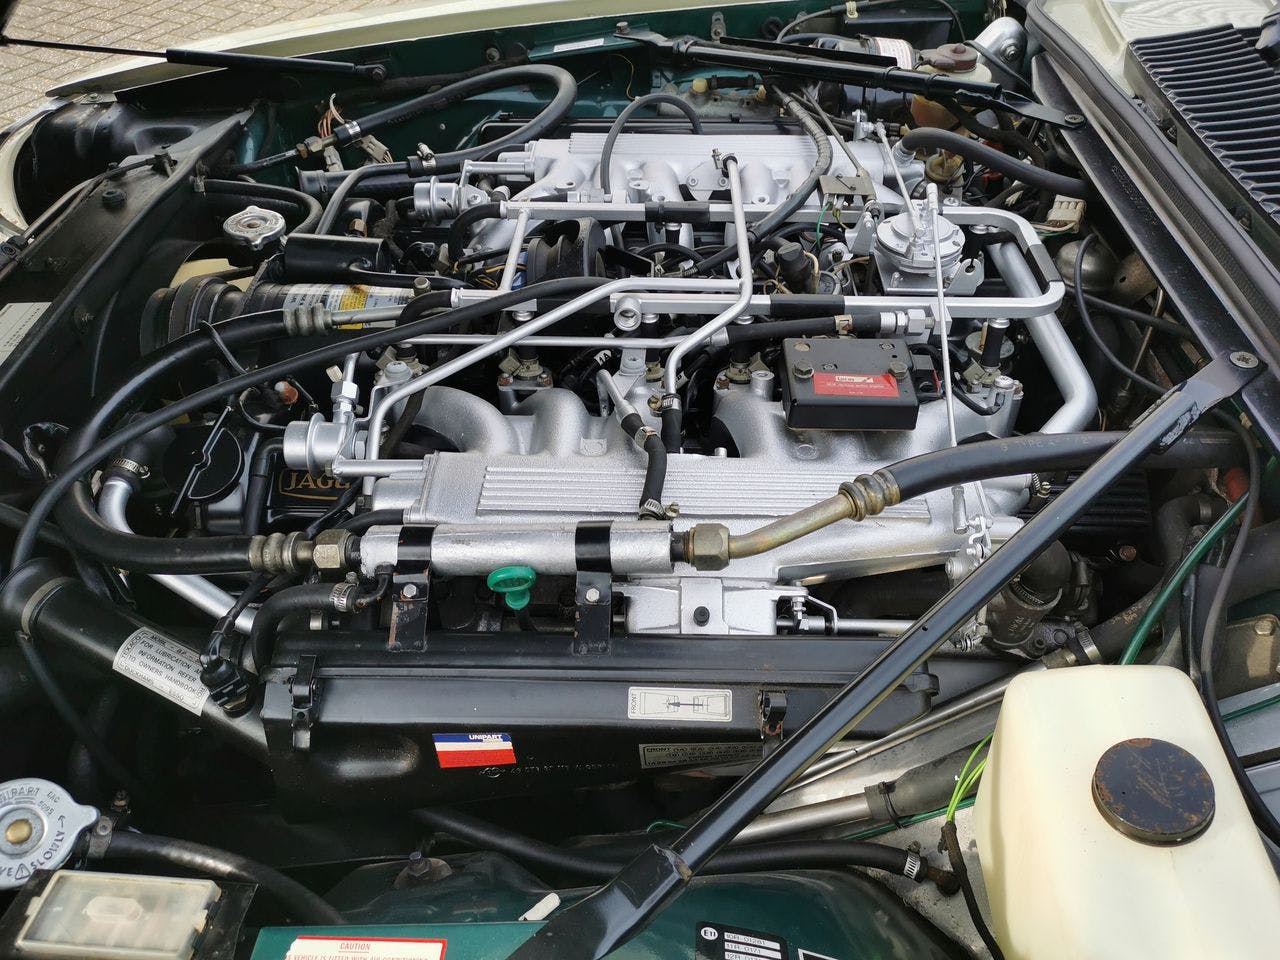 1983 Lynx Eventer engine